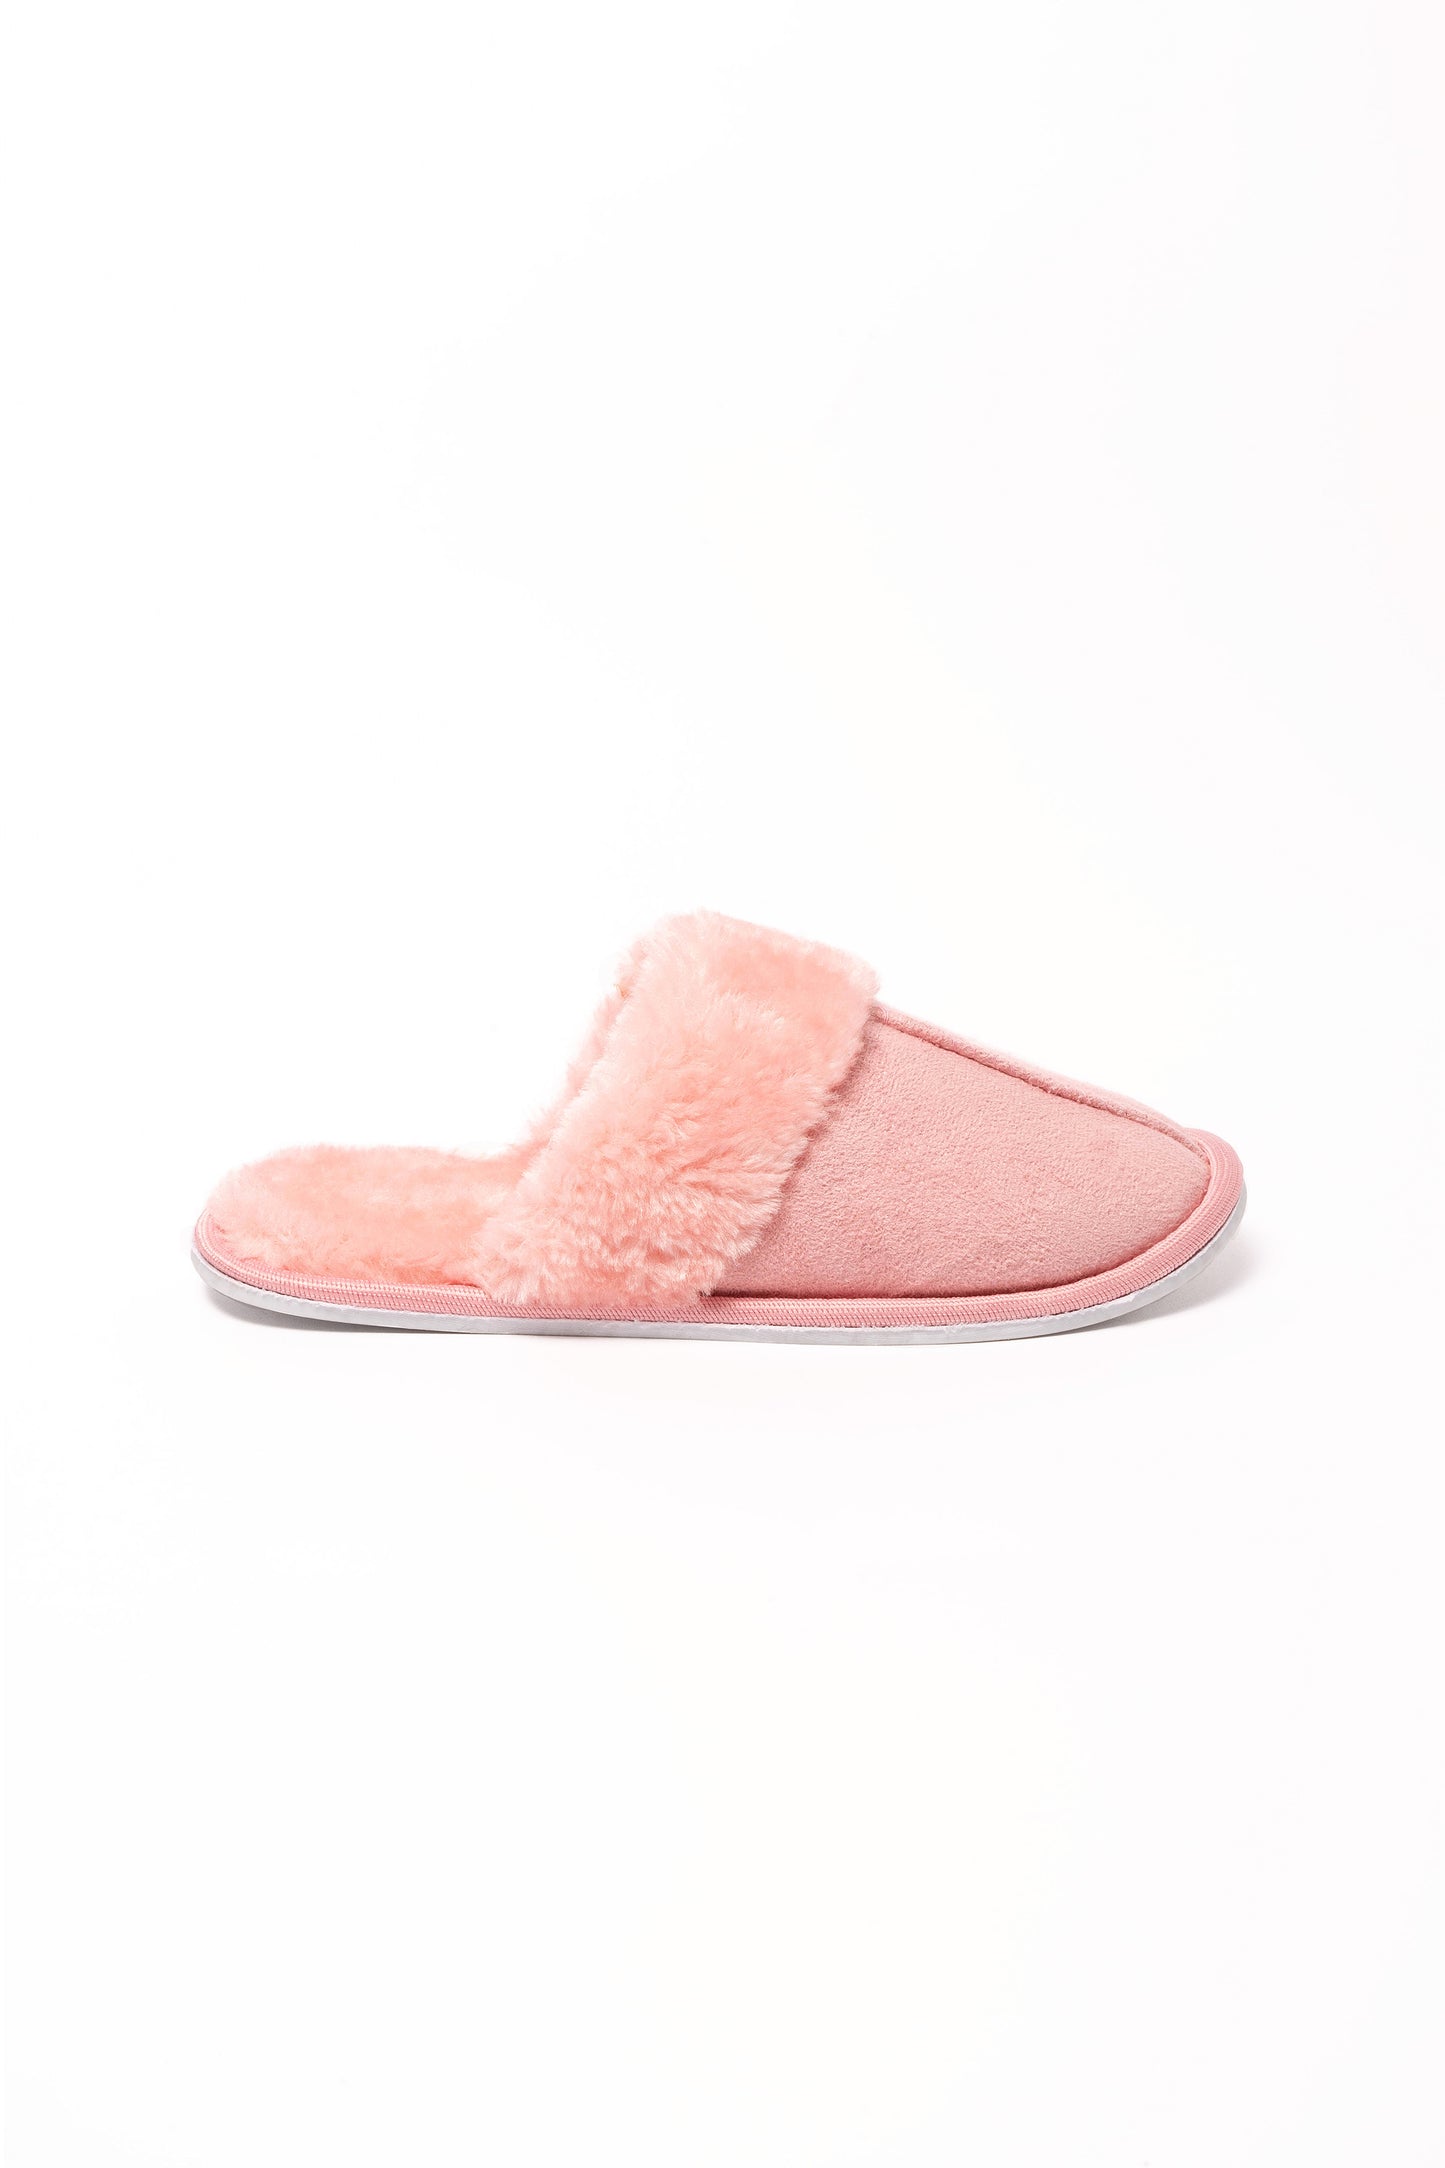 Francesca Faux Fur lined slippers